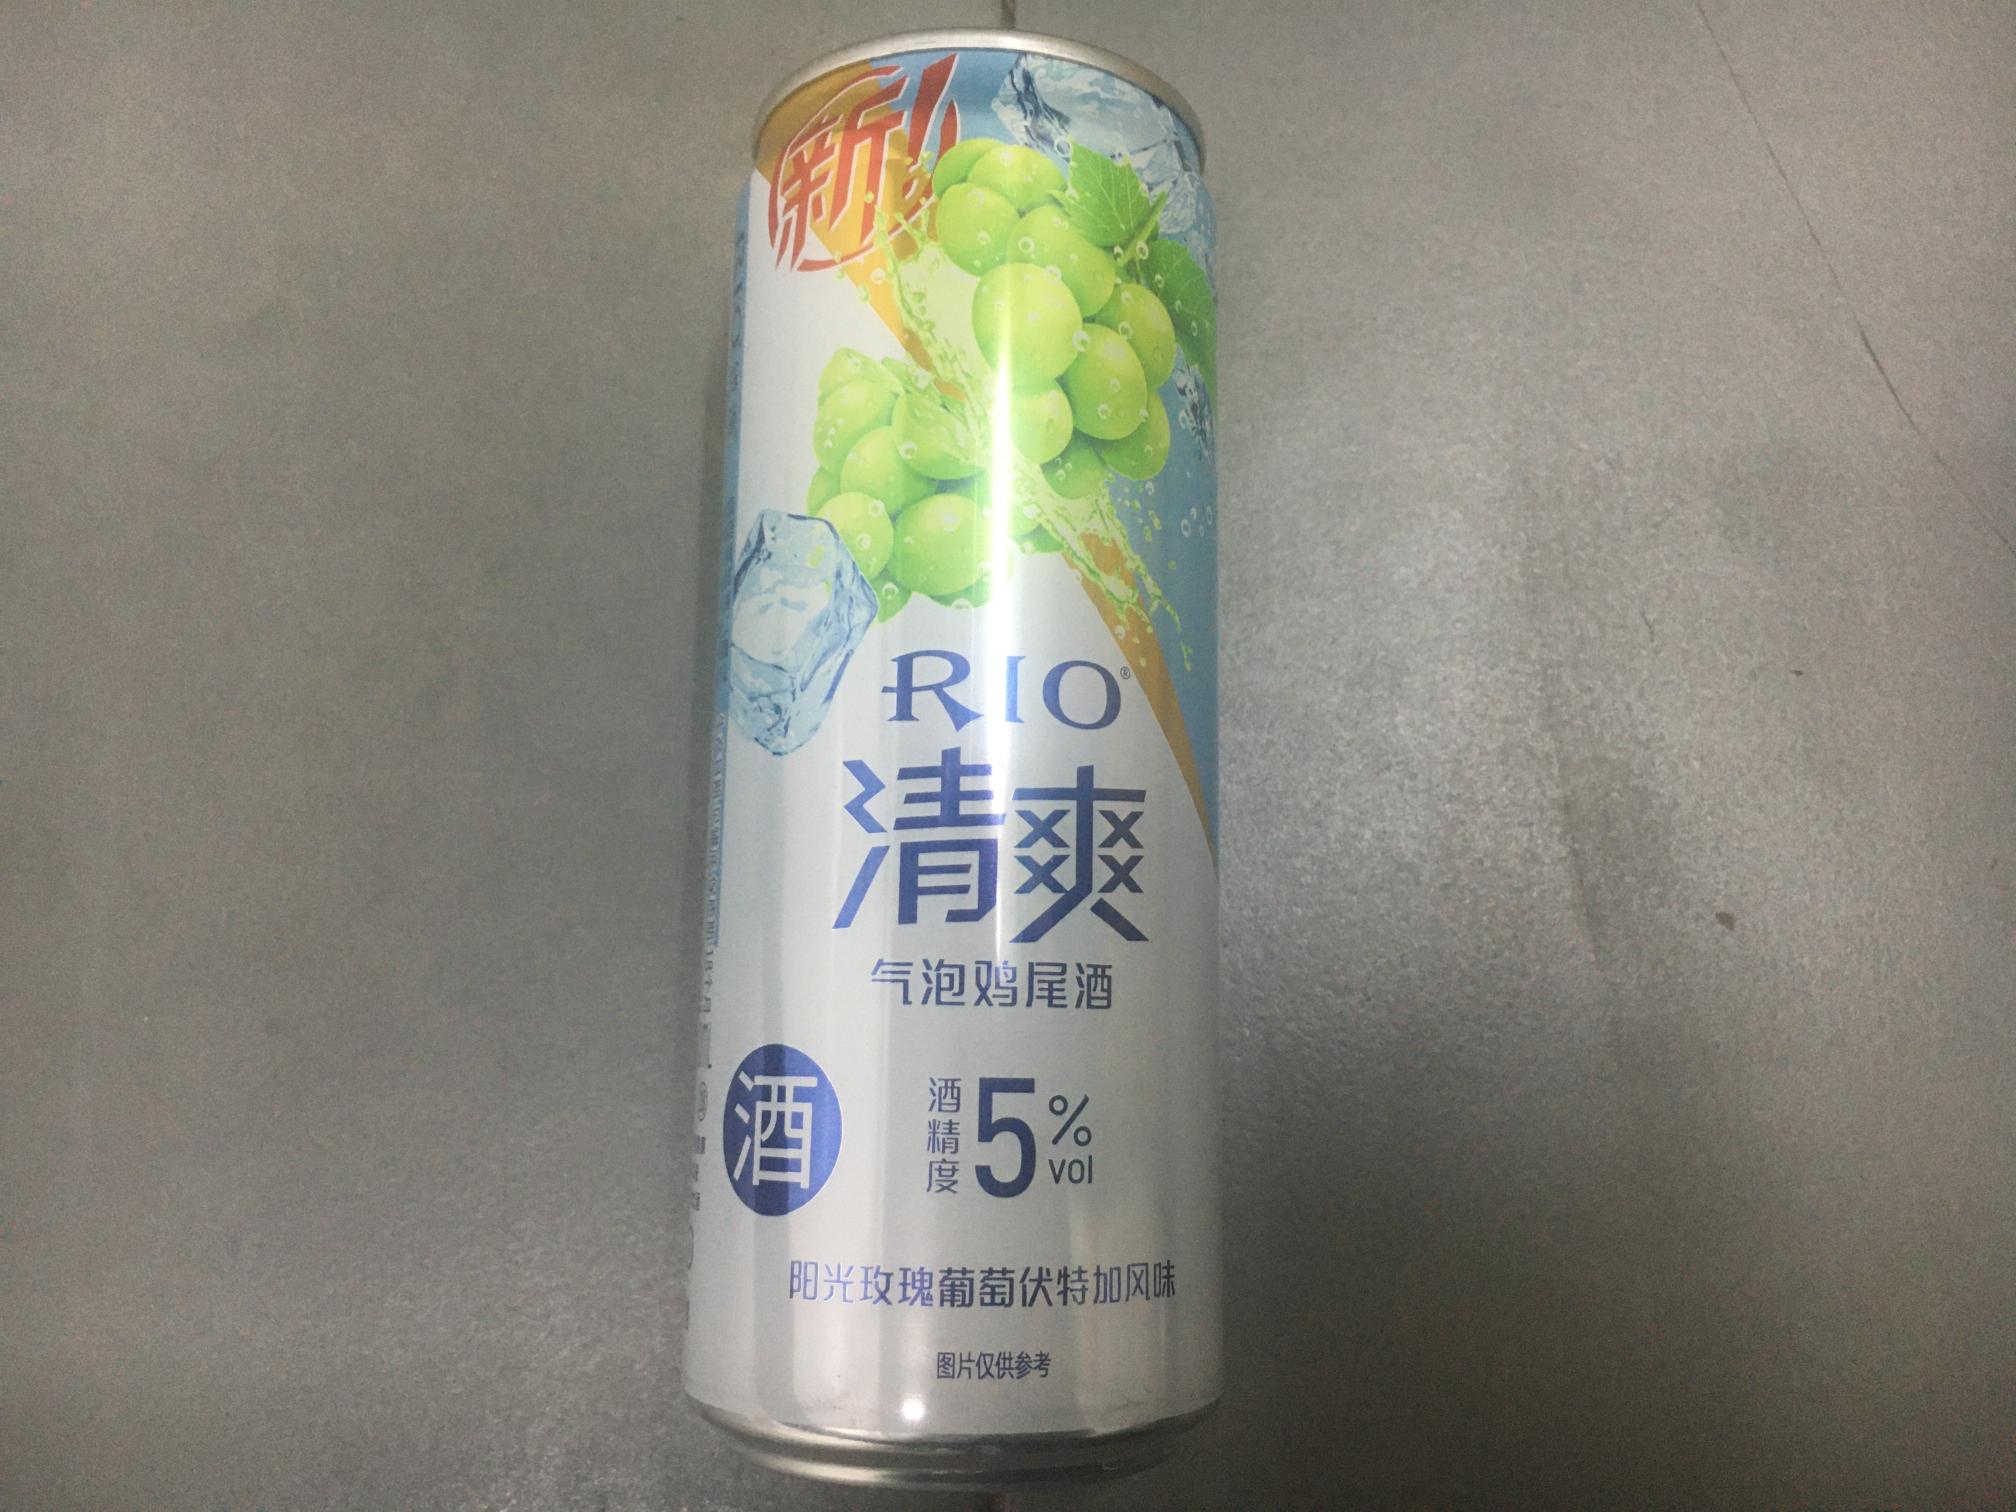 RIO清爽气泡鸡尾酒330ml(阳光玫瑰葡萄伏特加风味)